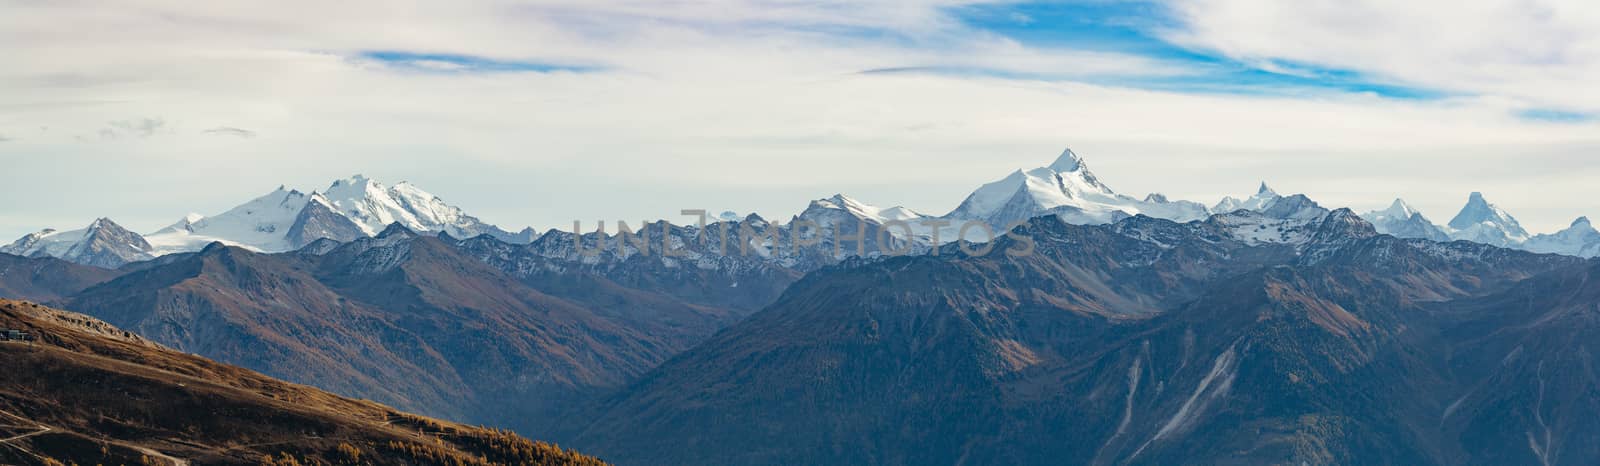 Panoramic view of the Swiss alps from the Daubenhorn mountain.